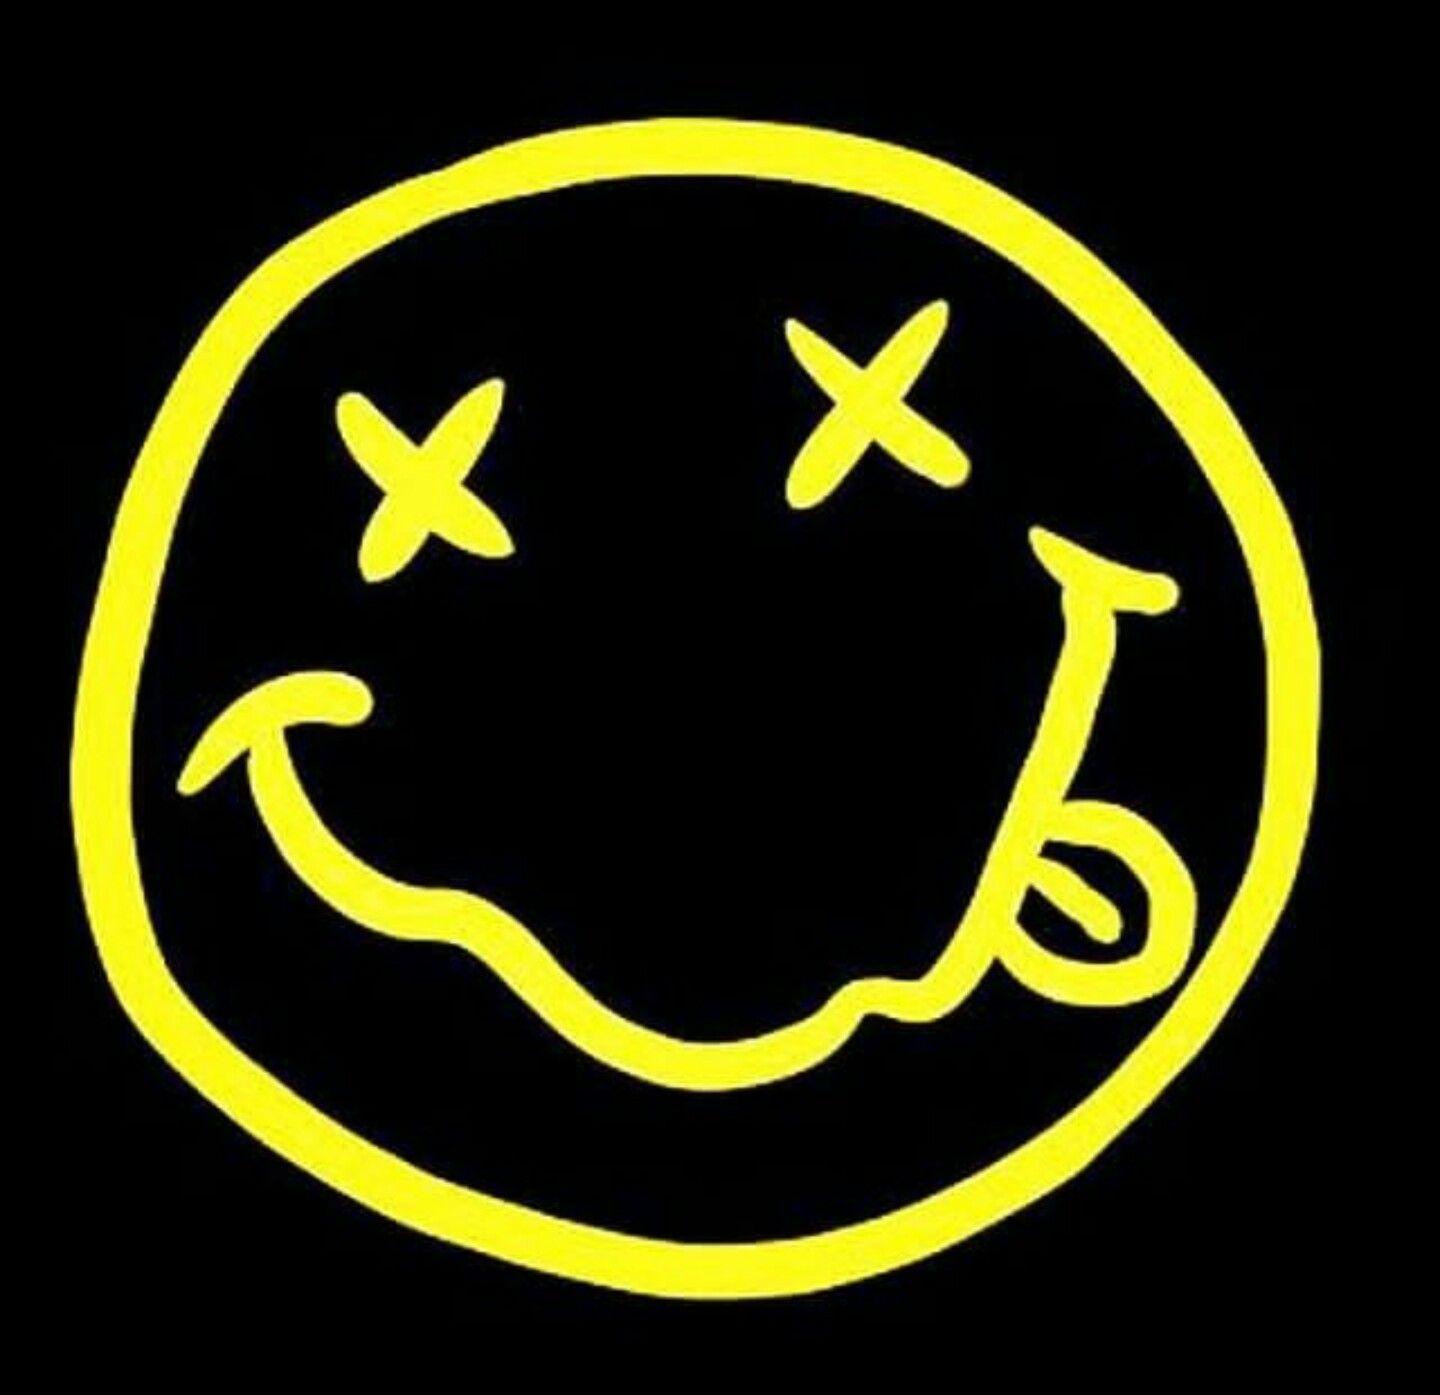 Nirvana Band Logo - Pin by Shalynn Mattingly on Draws | Pinterest | Nirvana, Band logos ...